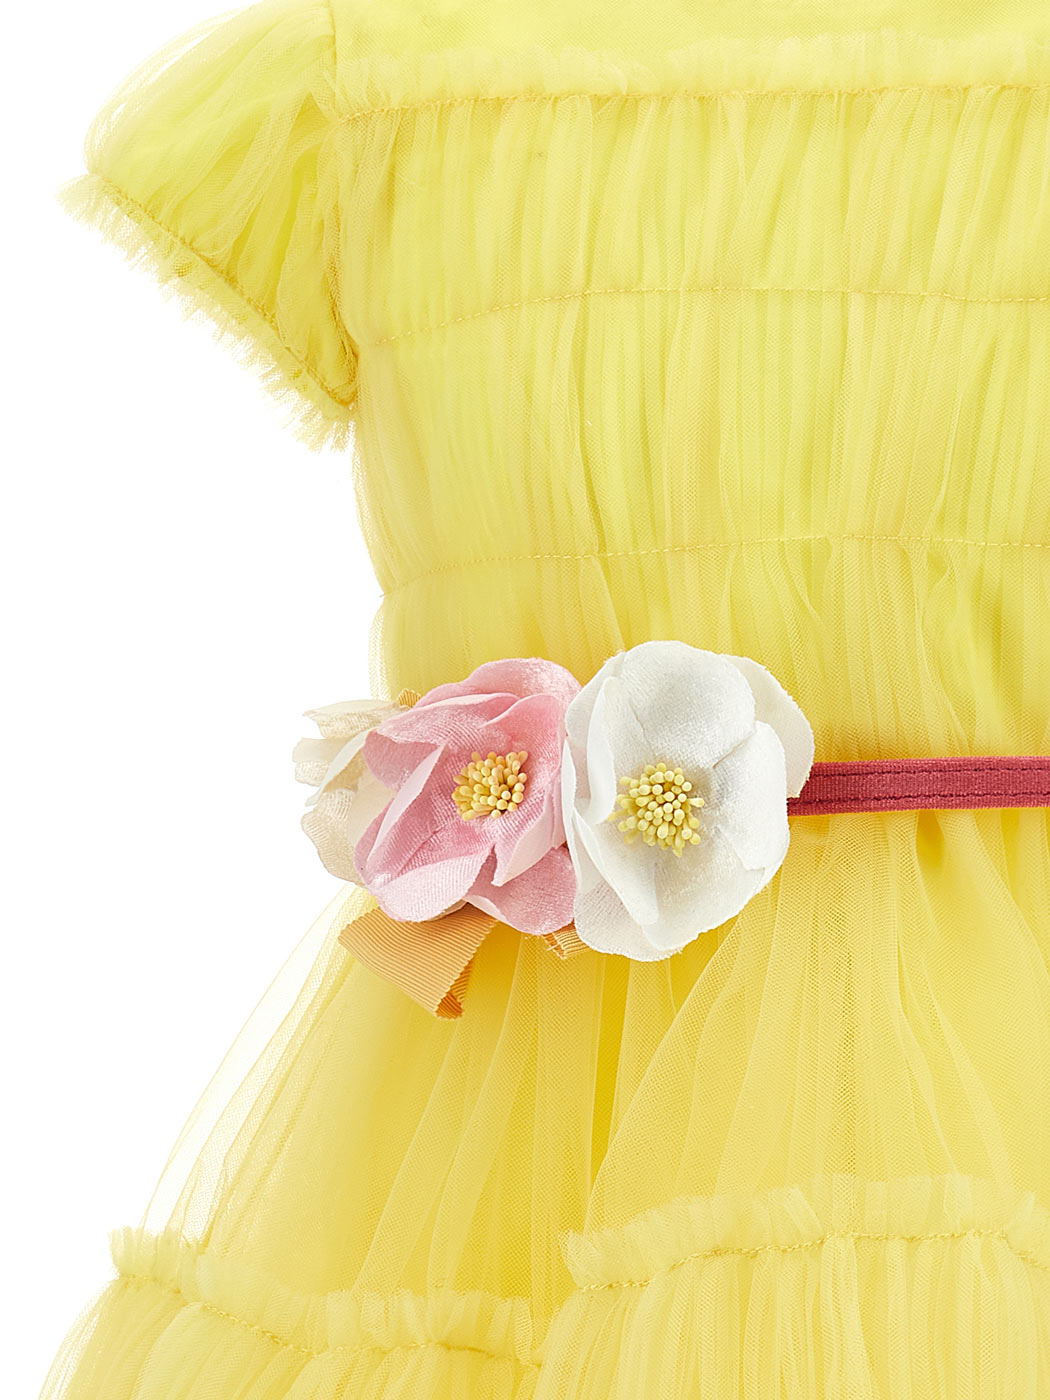 MONNALISA Girls Yellow tulle dress with flowers -19B900